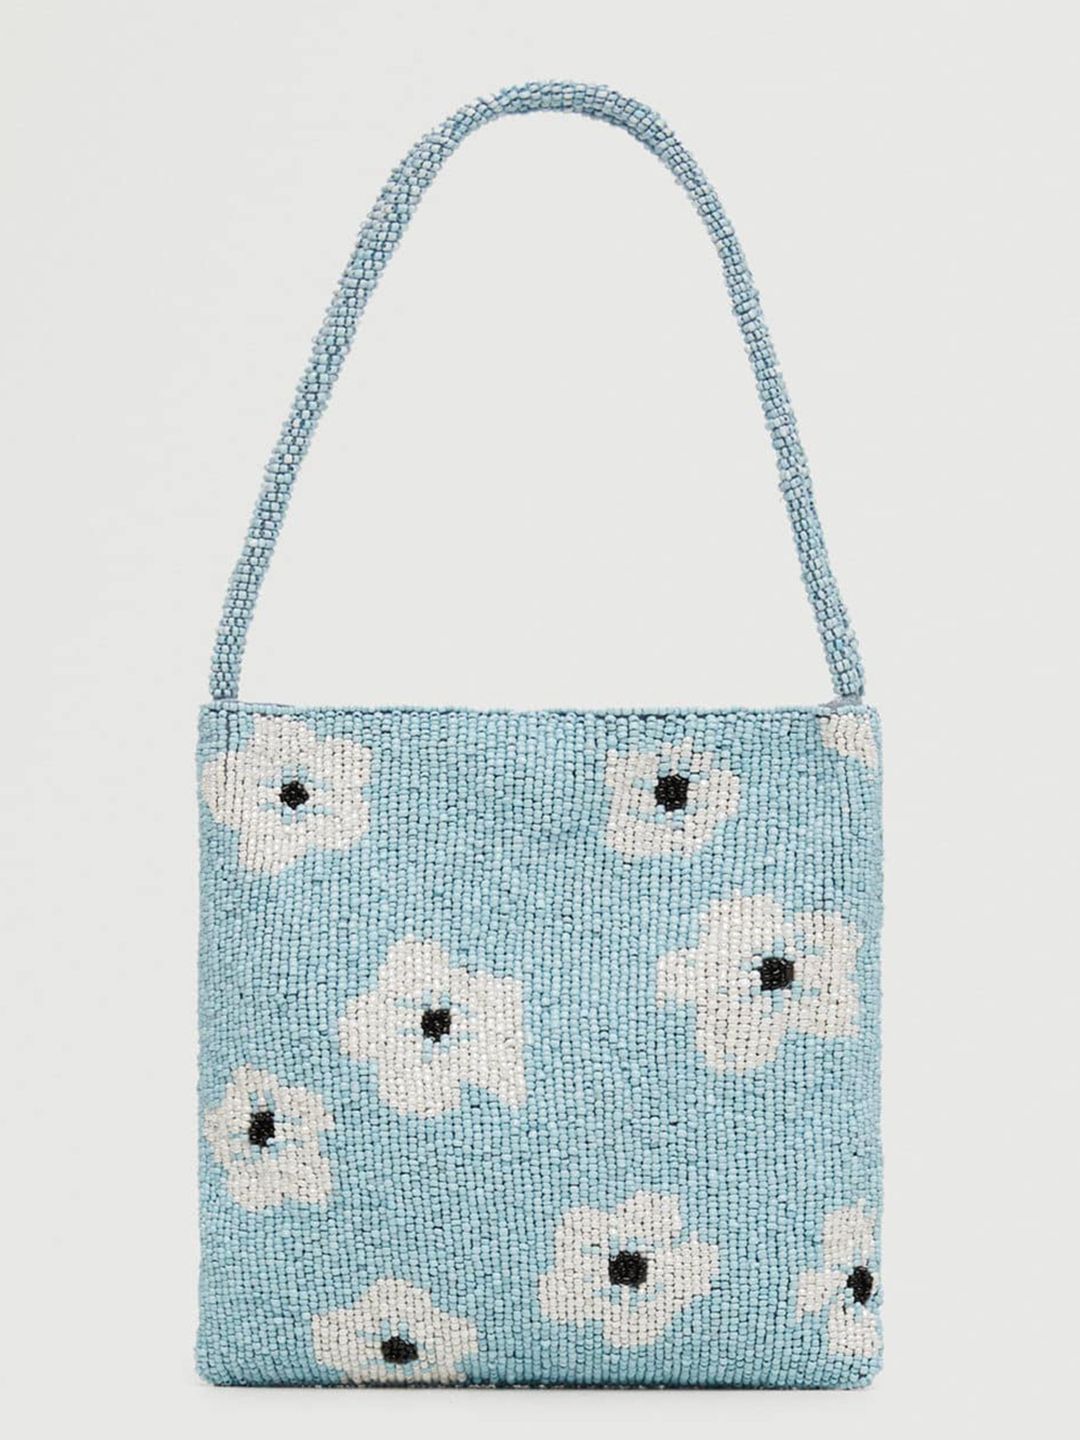 MANGO Blue & White Floral Embellished Structured Handheld Bag Price in India